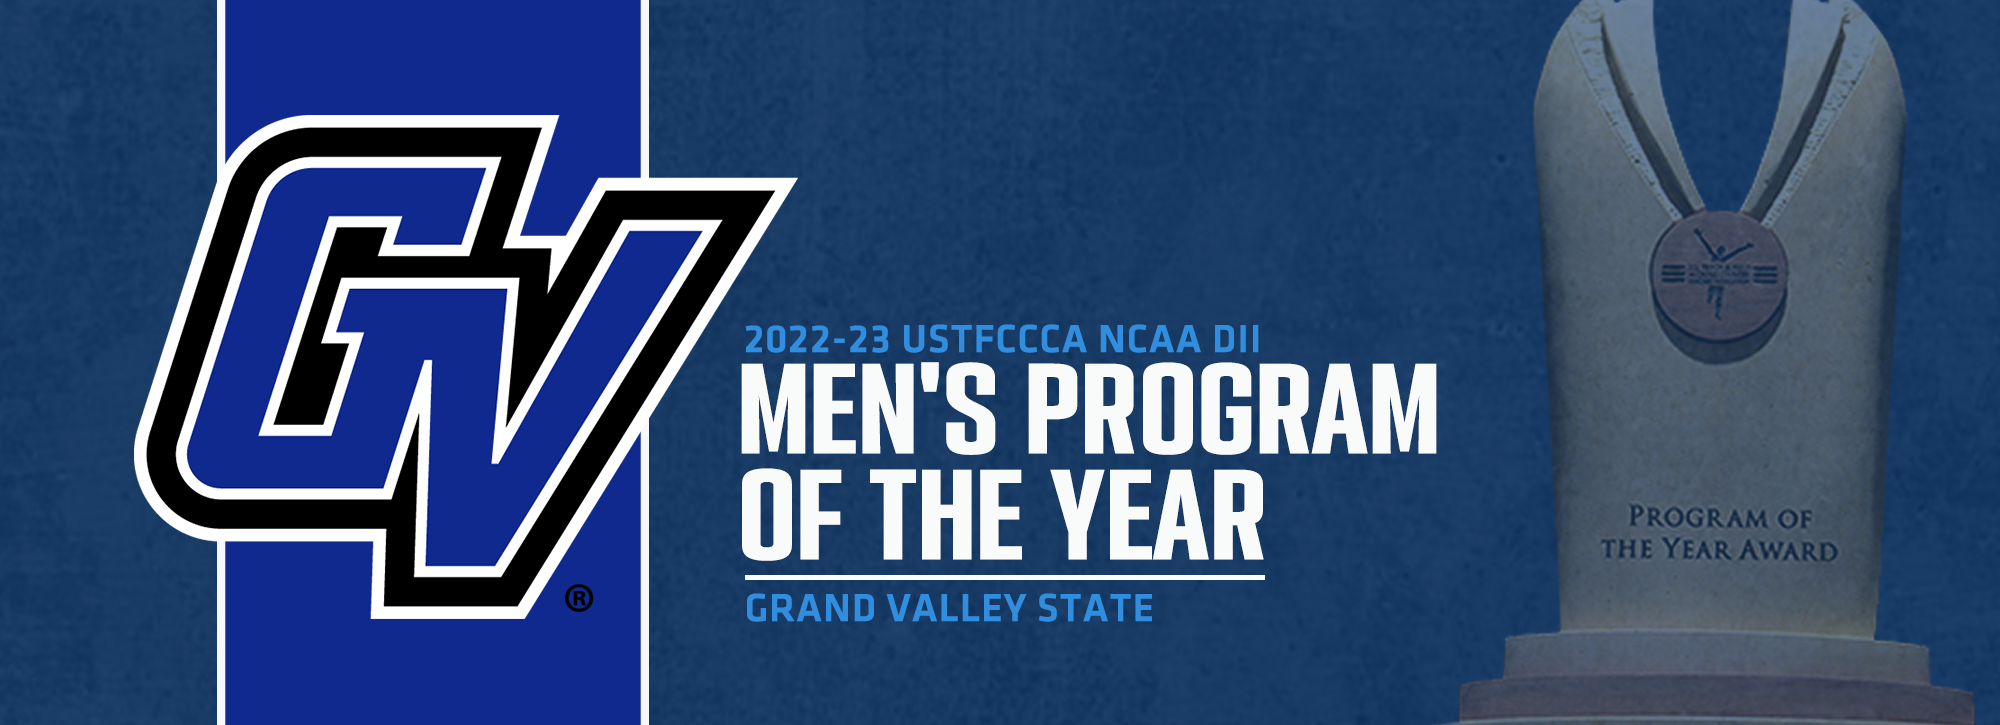 GVSU Men's Track & Field named USTFCCCA NCAA DII Program of the Year